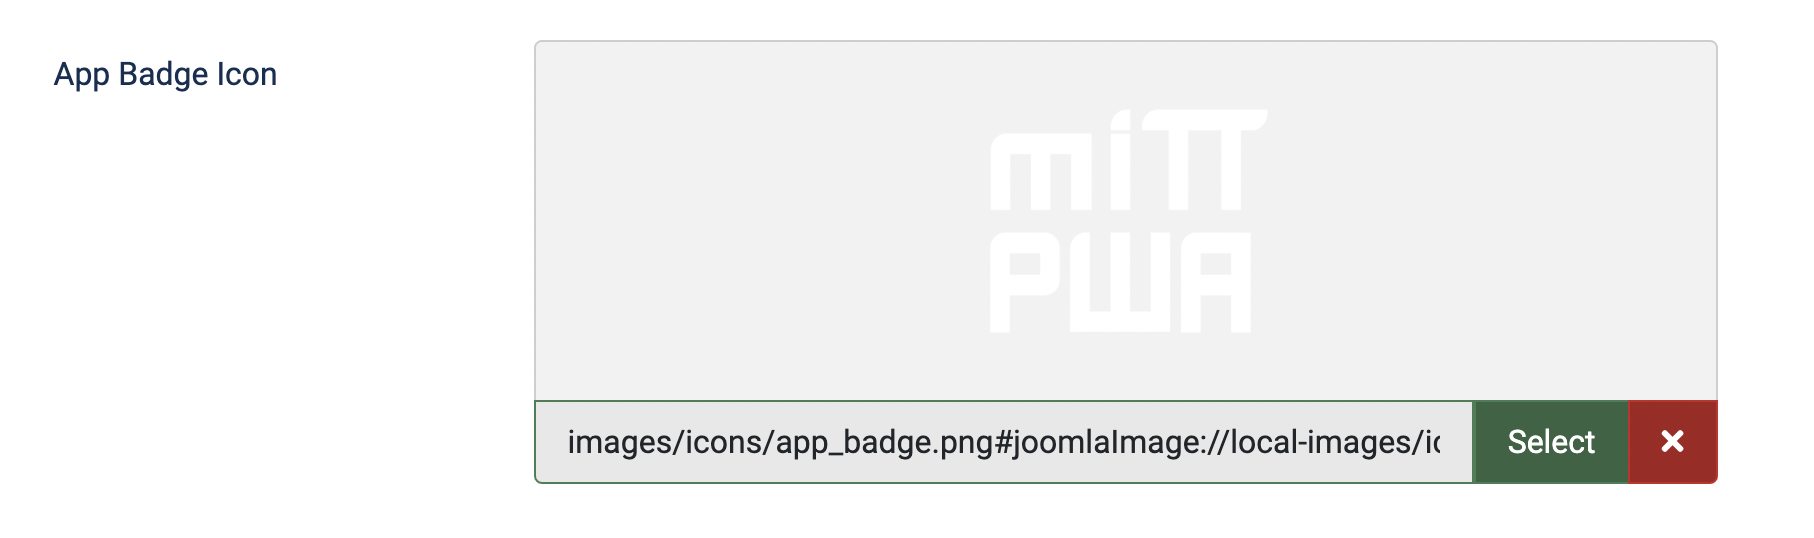 App Badge Icon